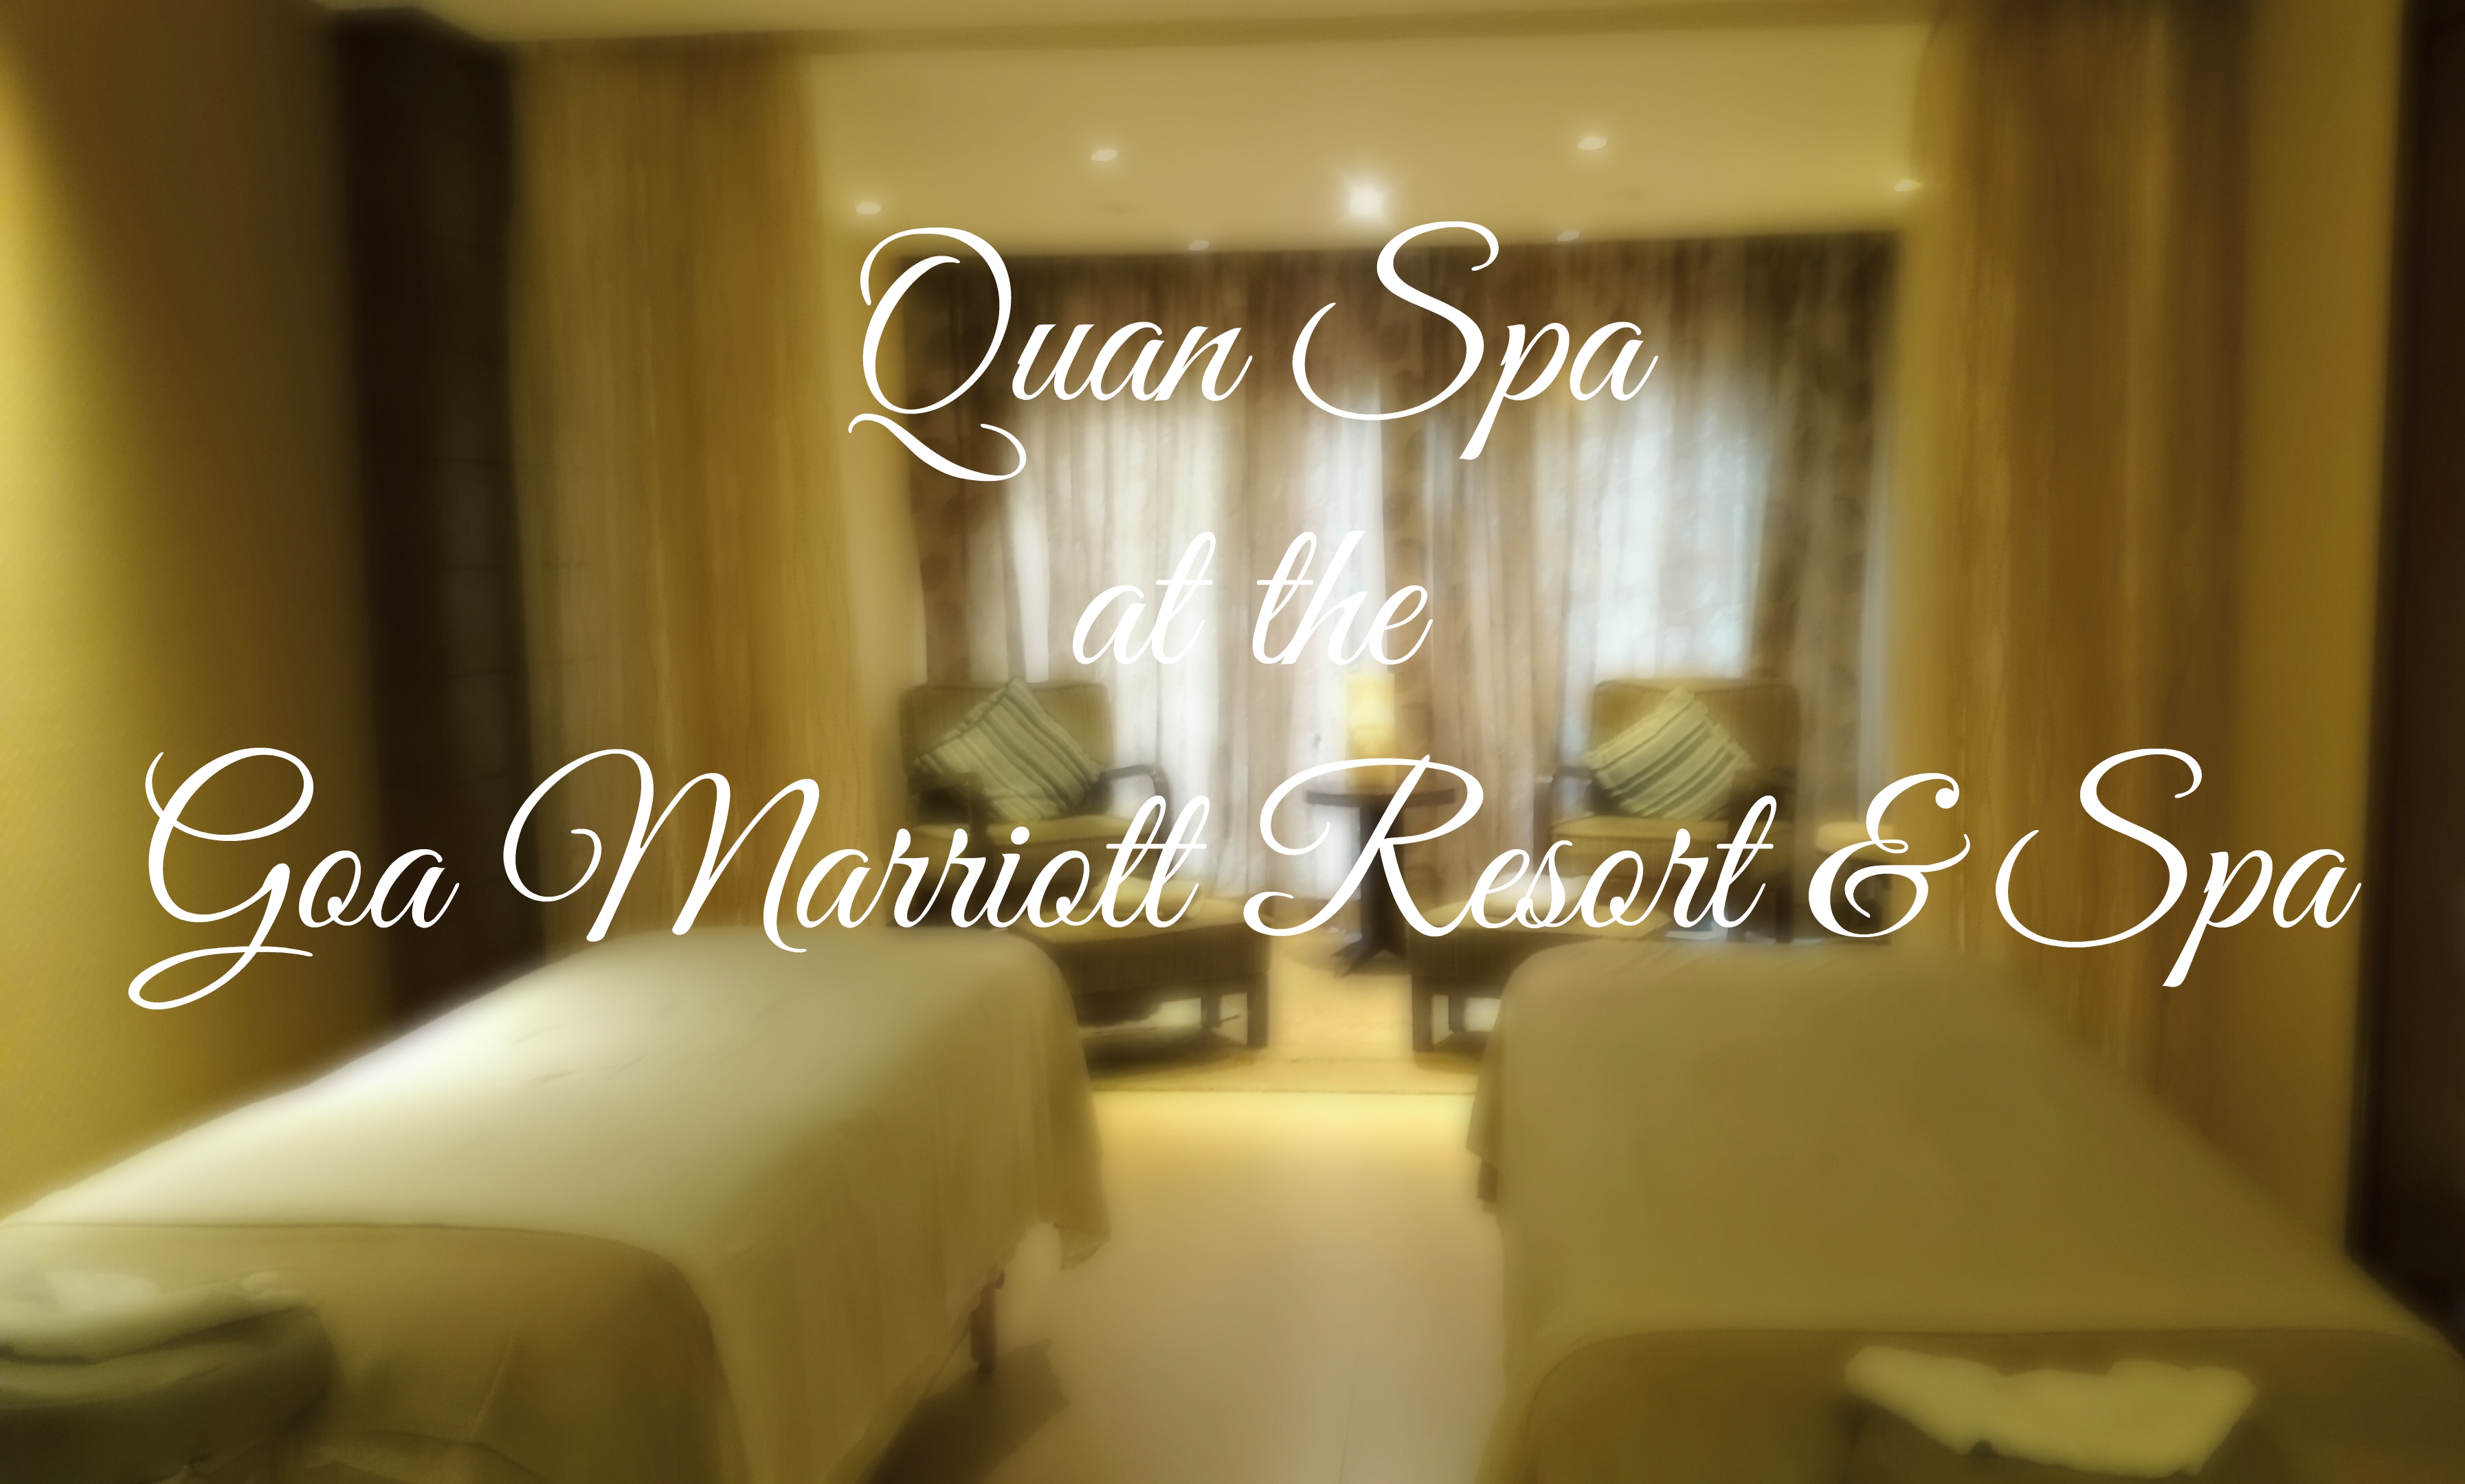 Review of the Quan Spa at Goa Marriott